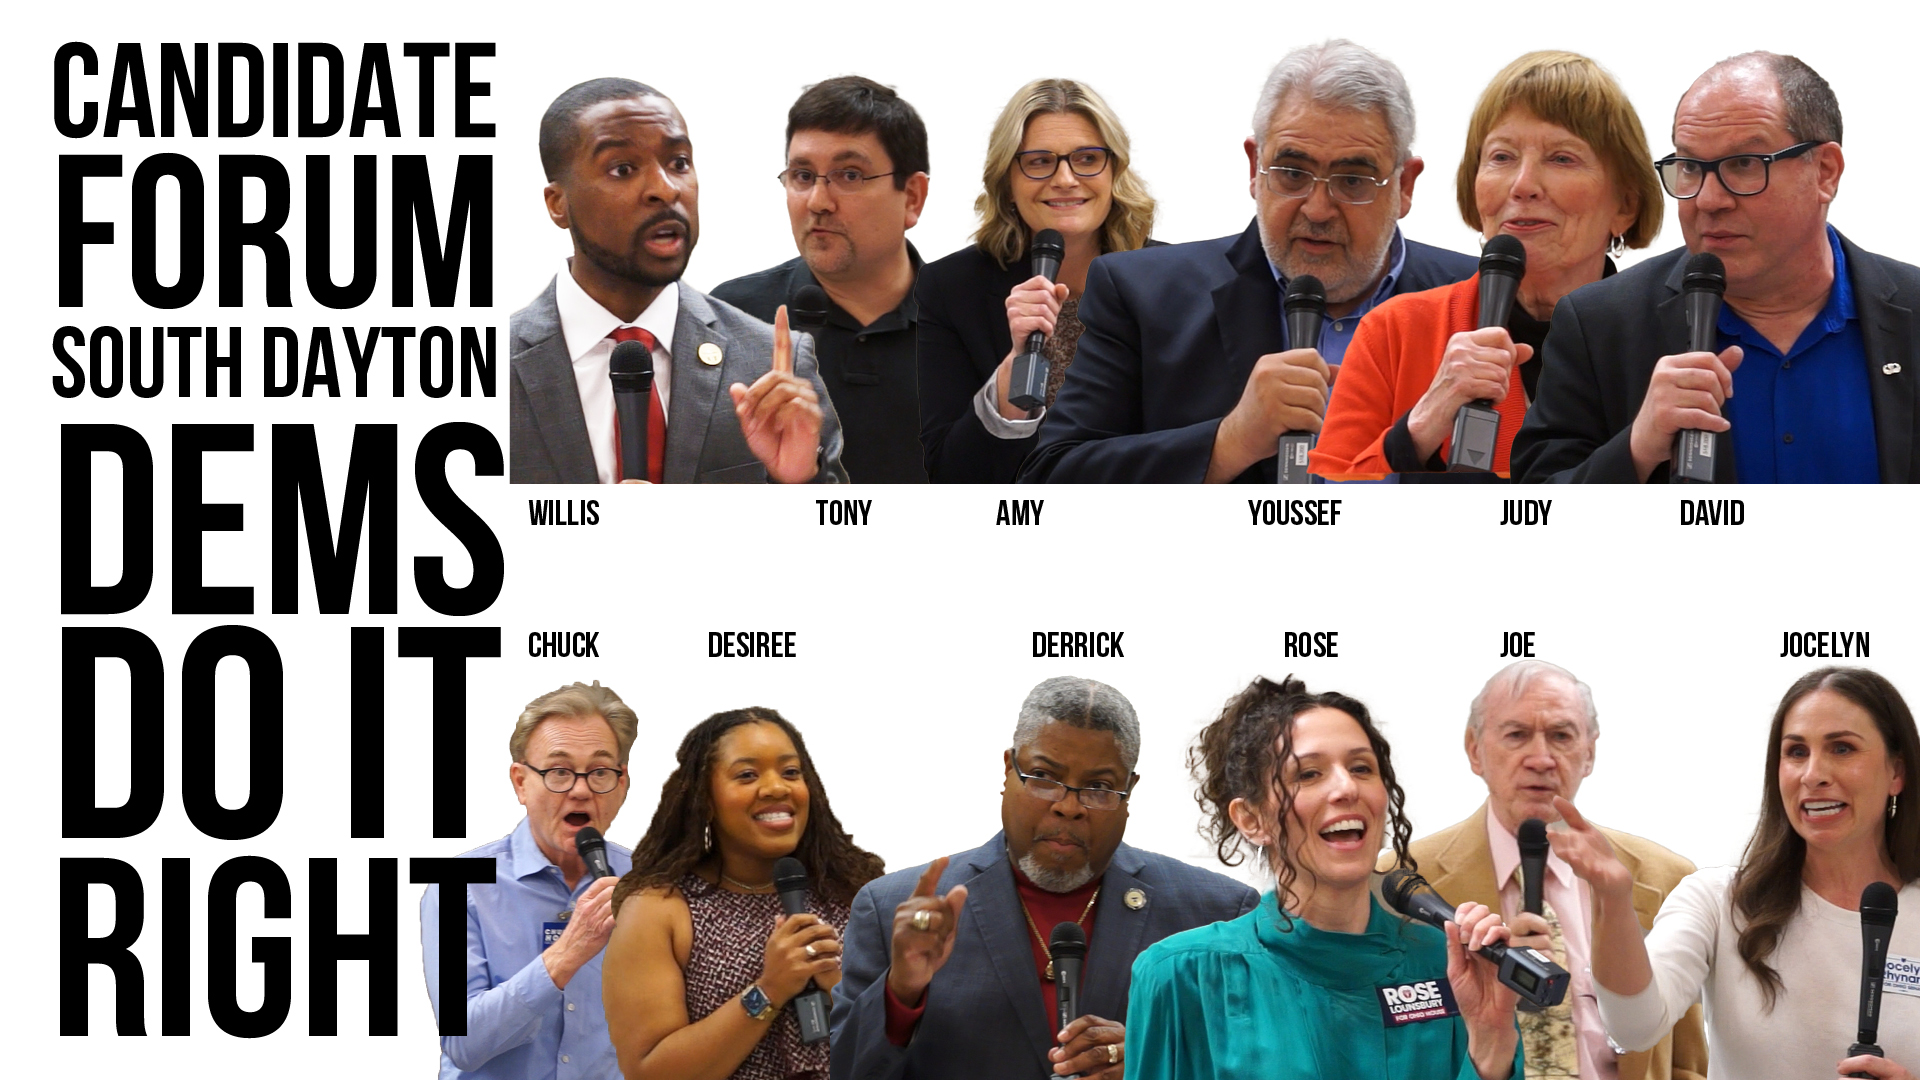 South Dayton Dems host candidates forum